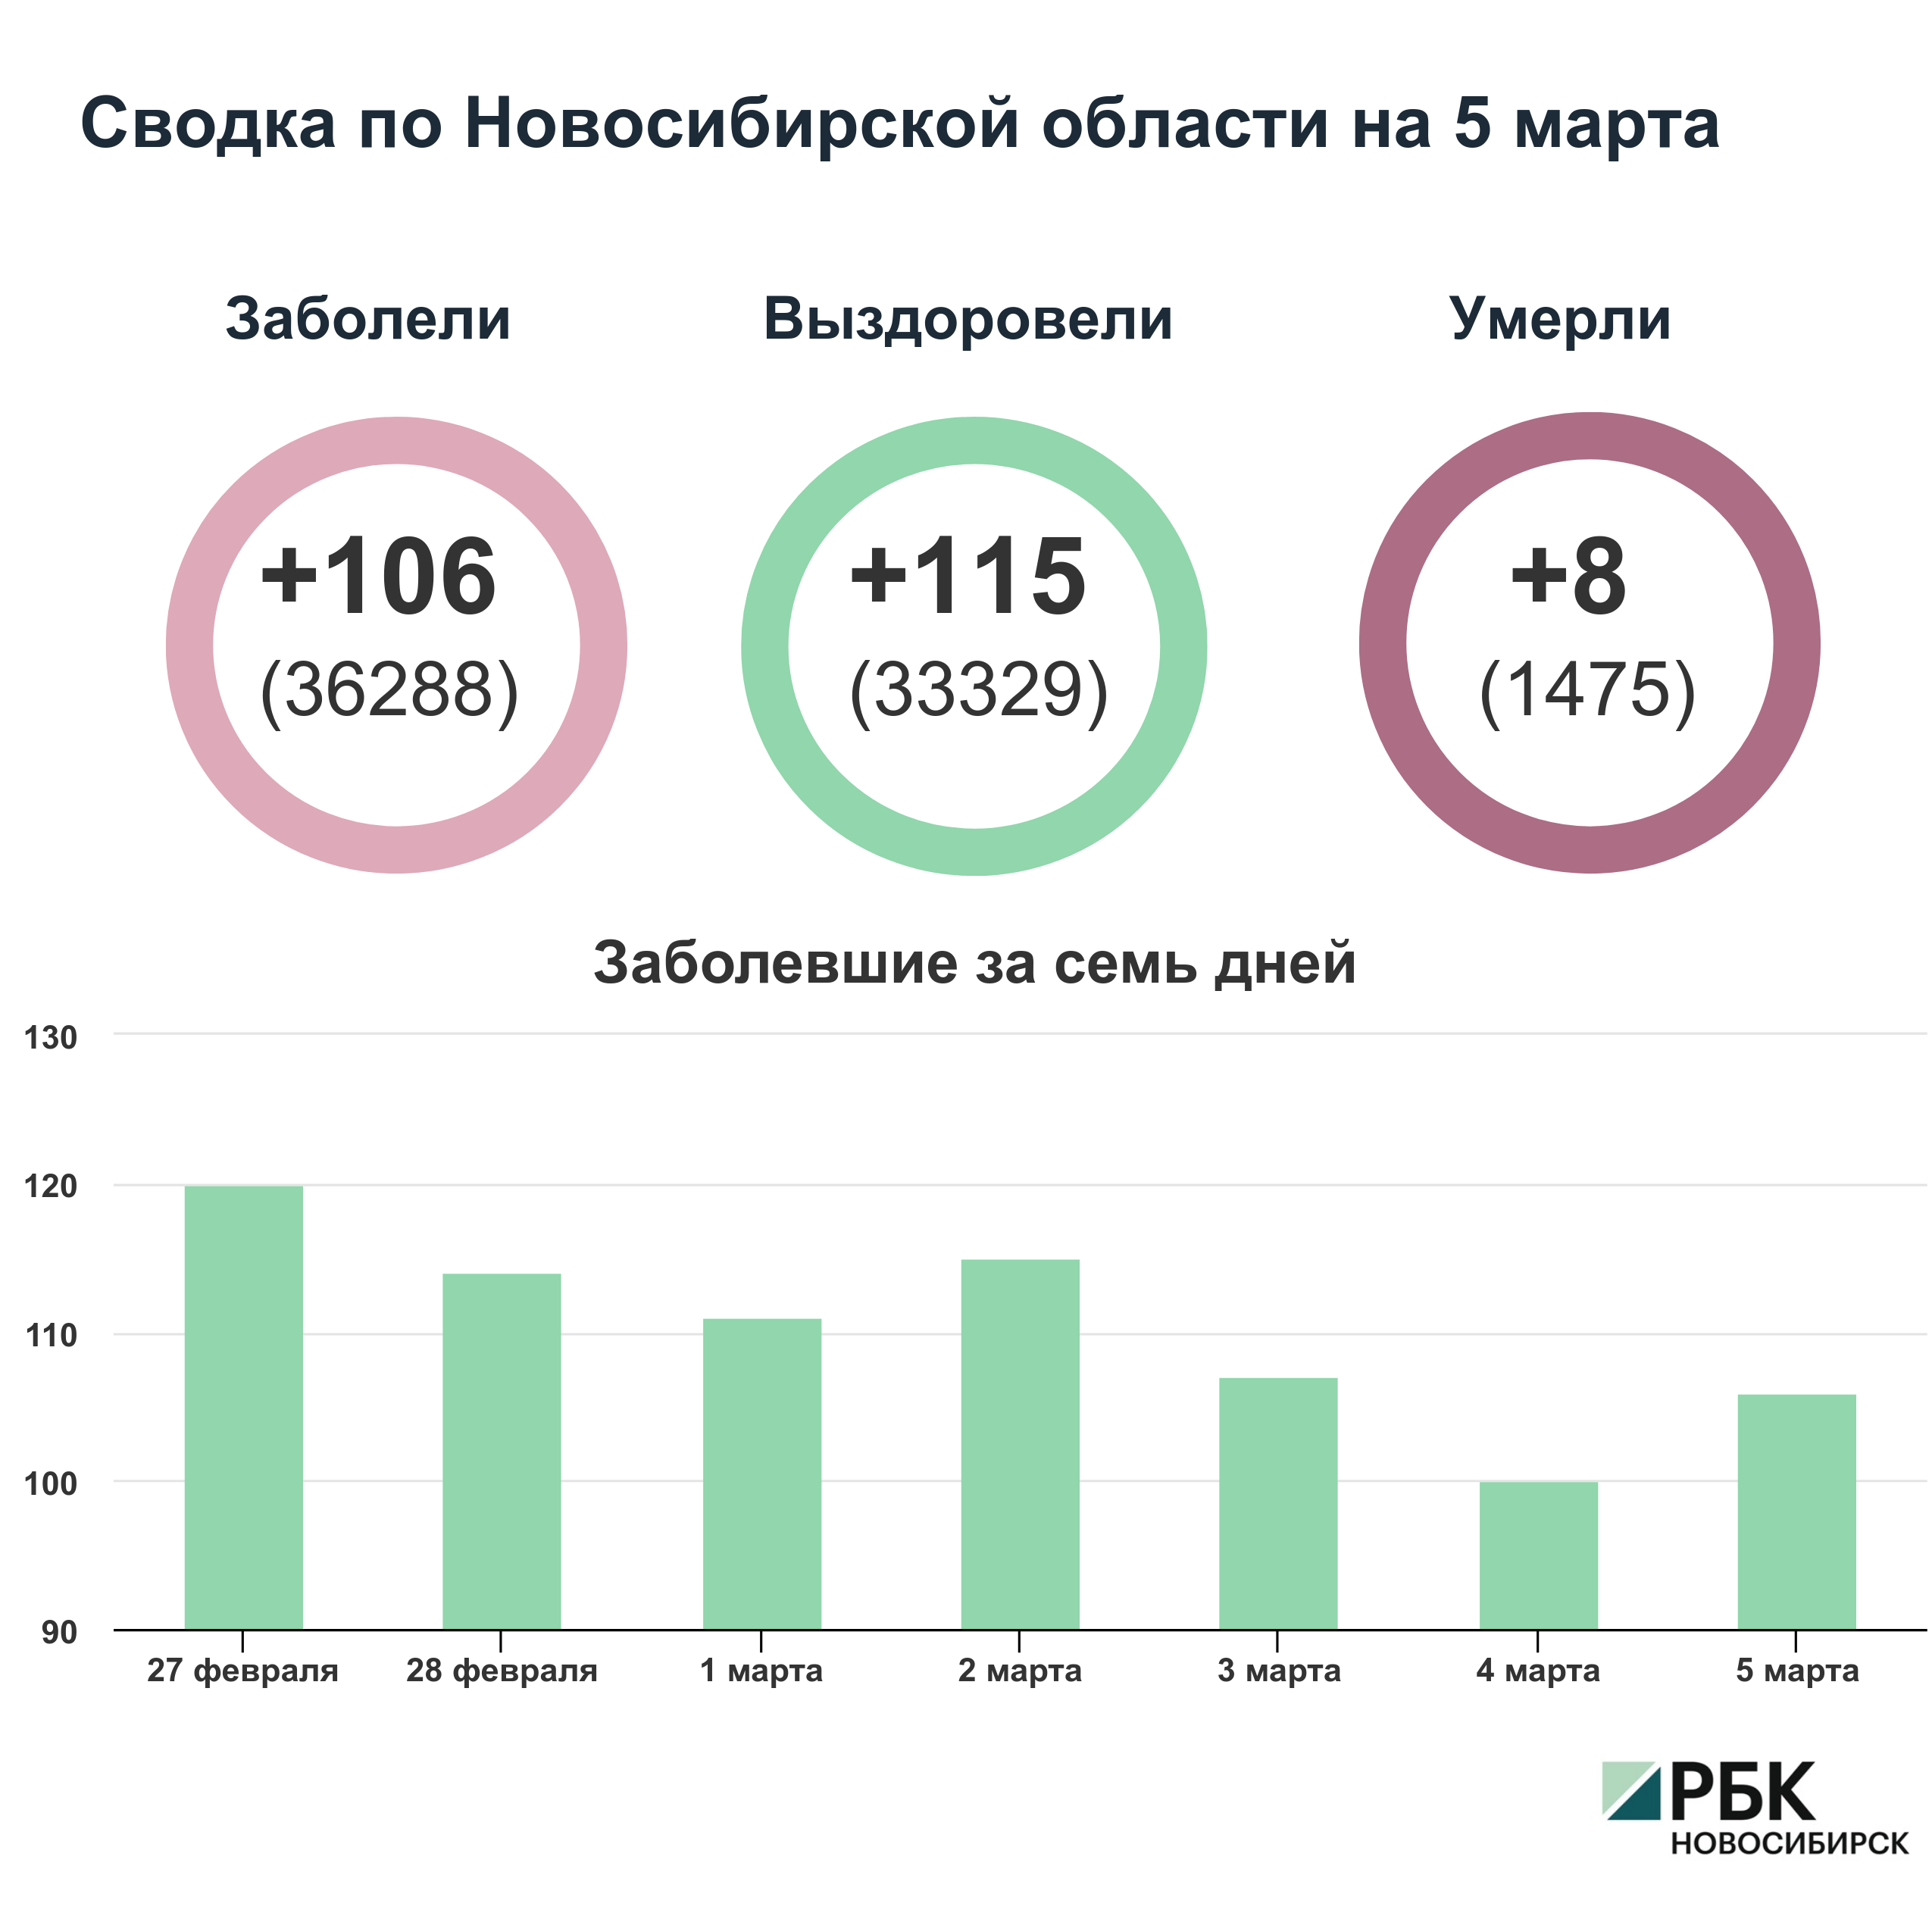 Коронавирус в Новосибирске: сводка на 5 марта